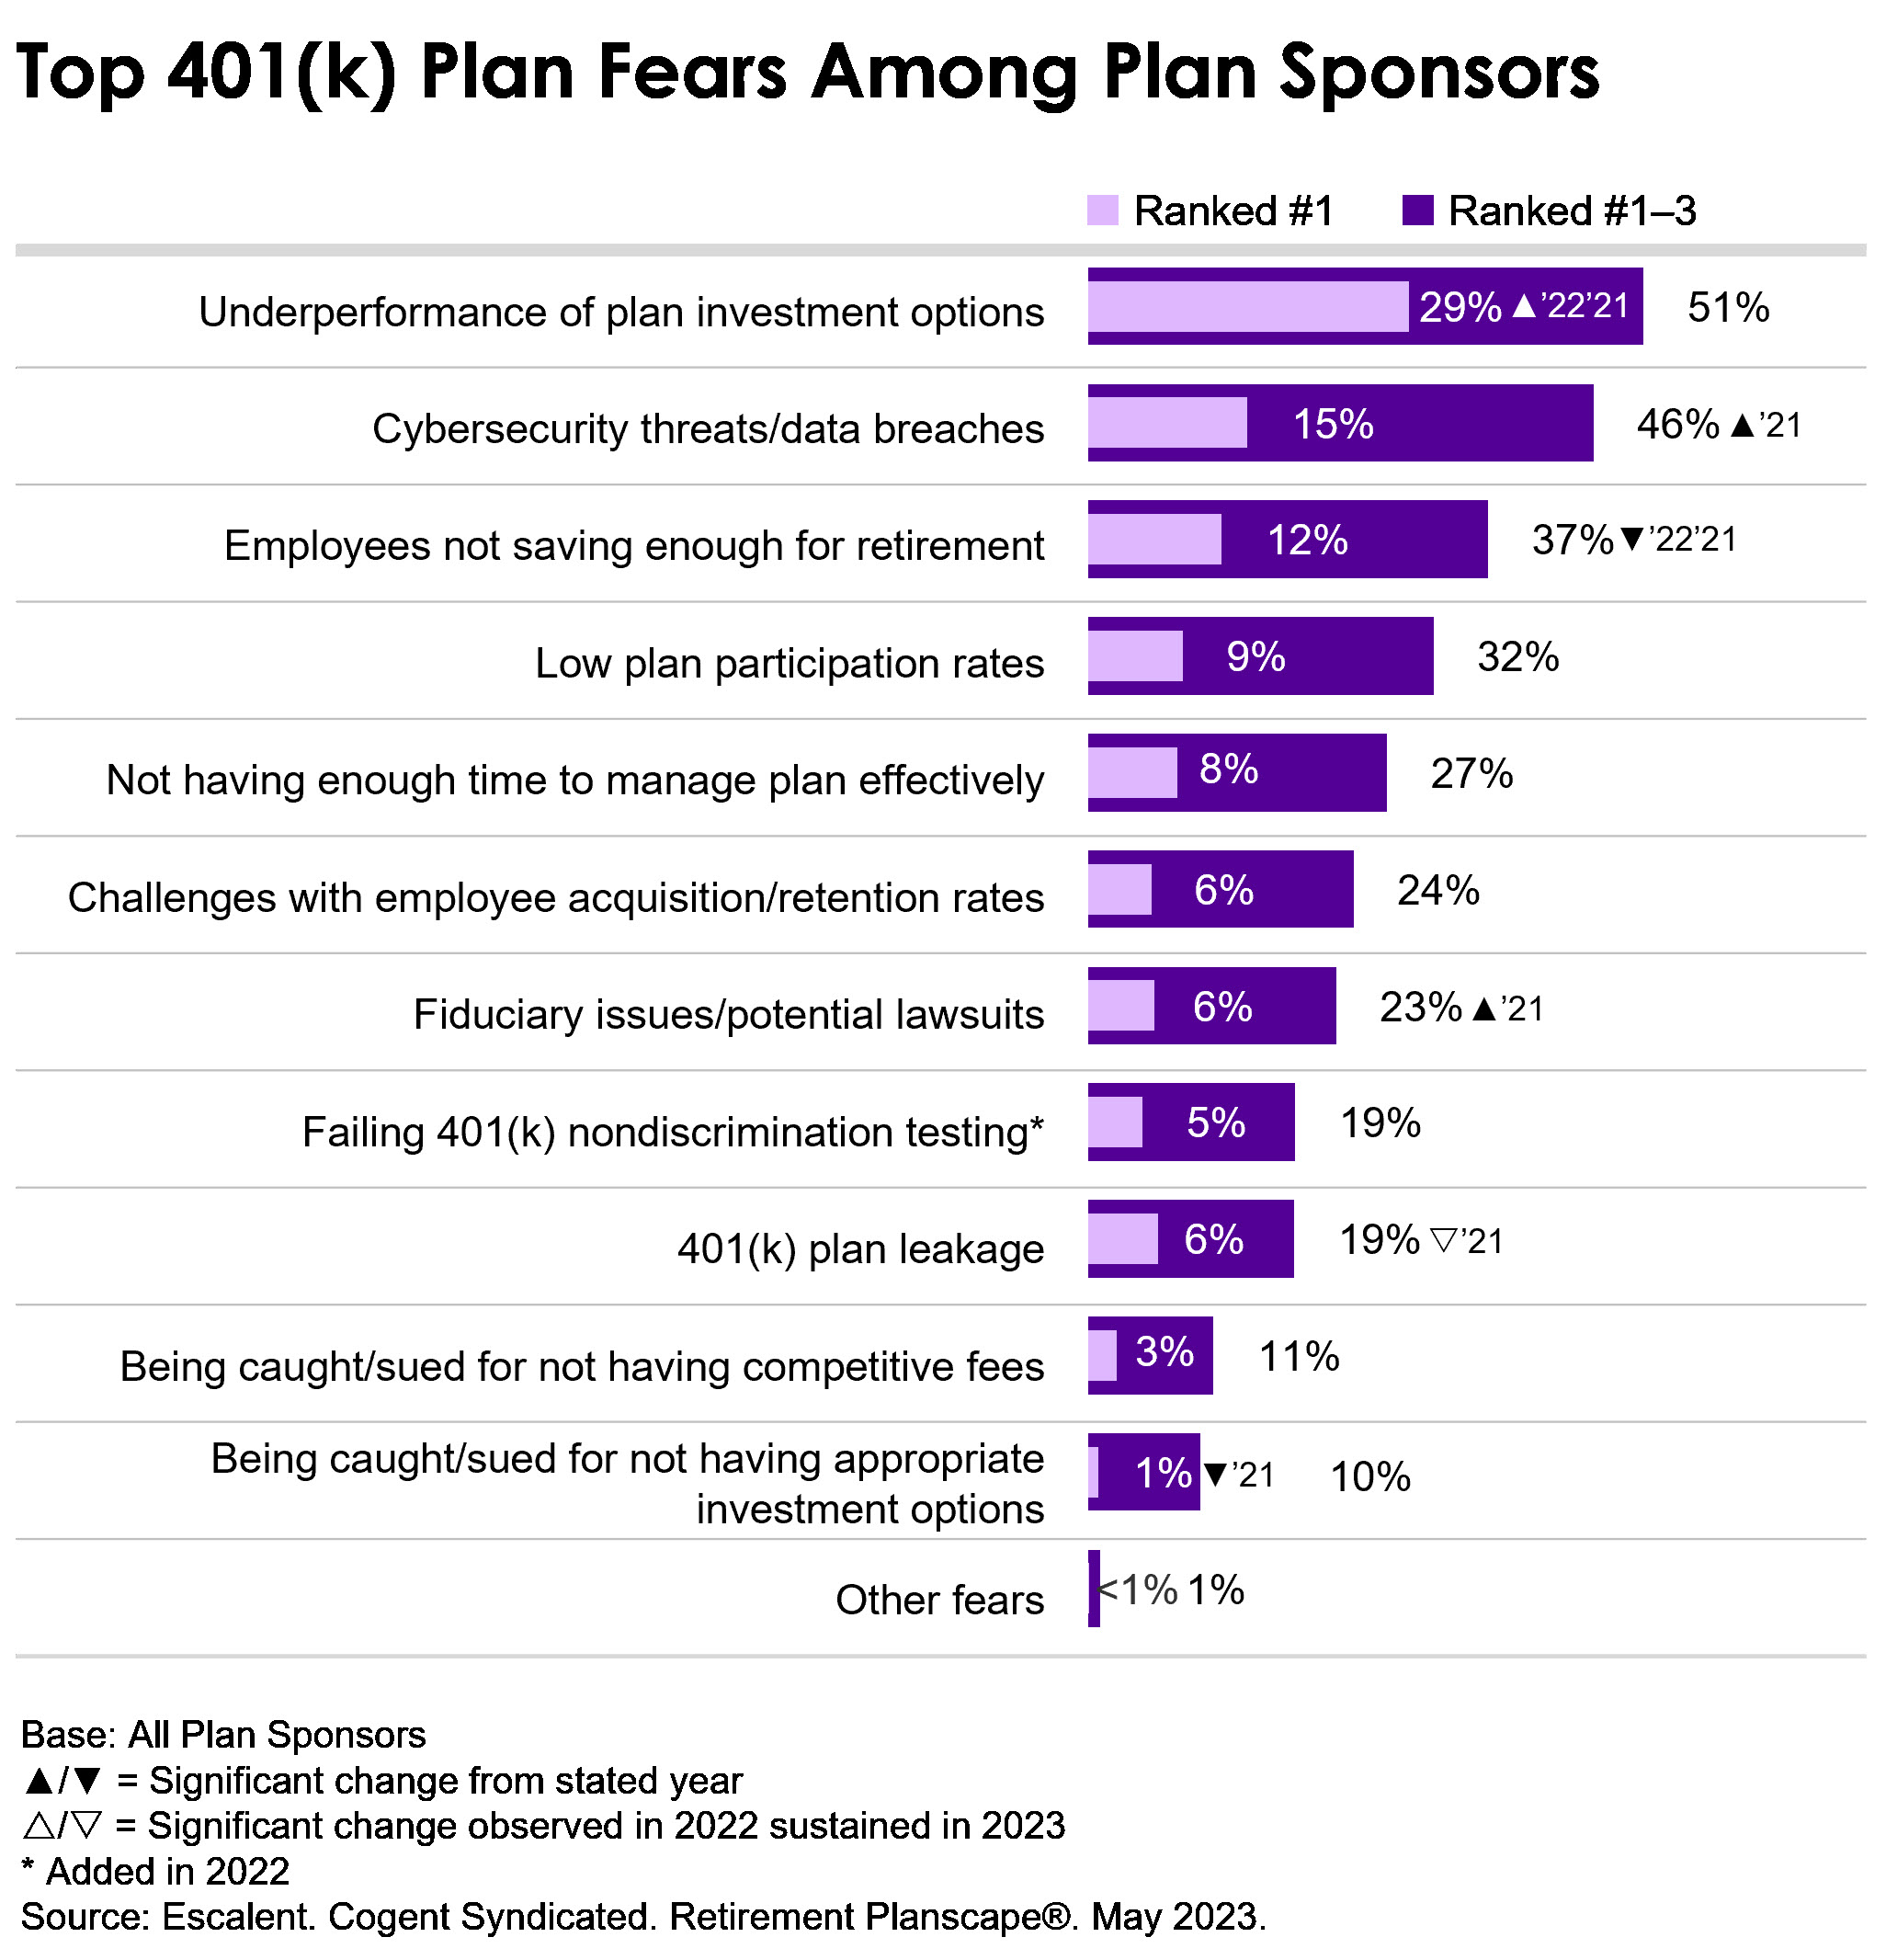 A chart depicting top 401(k) fears among plan sponsors.